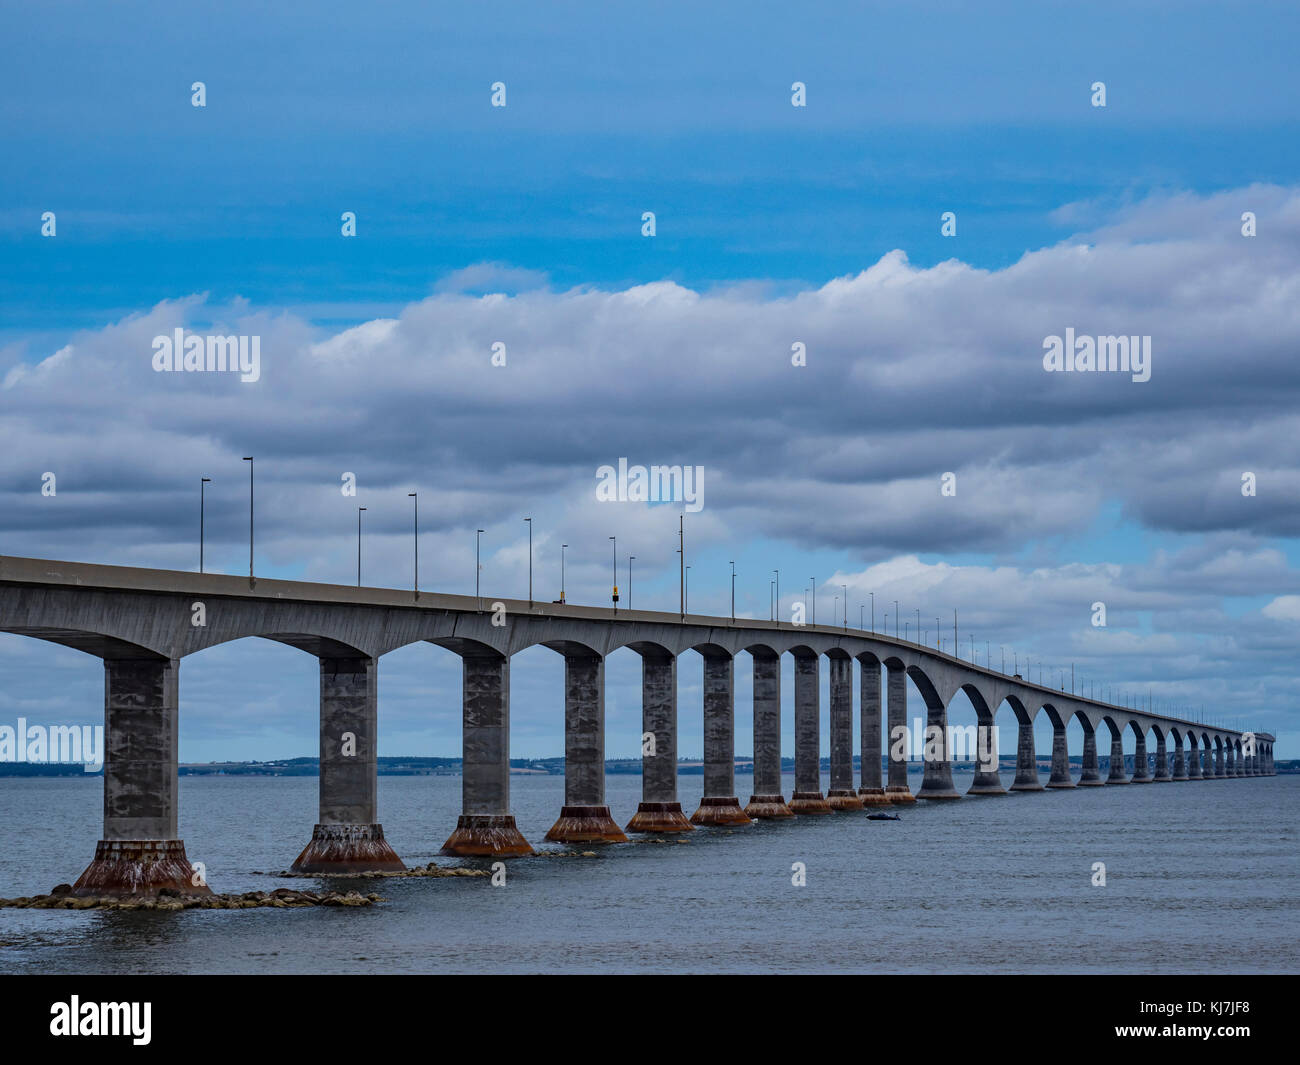 Confederation Bridge a pei visto desde Cape Jourimain, New Brunswick, Canadá. Foto de stock